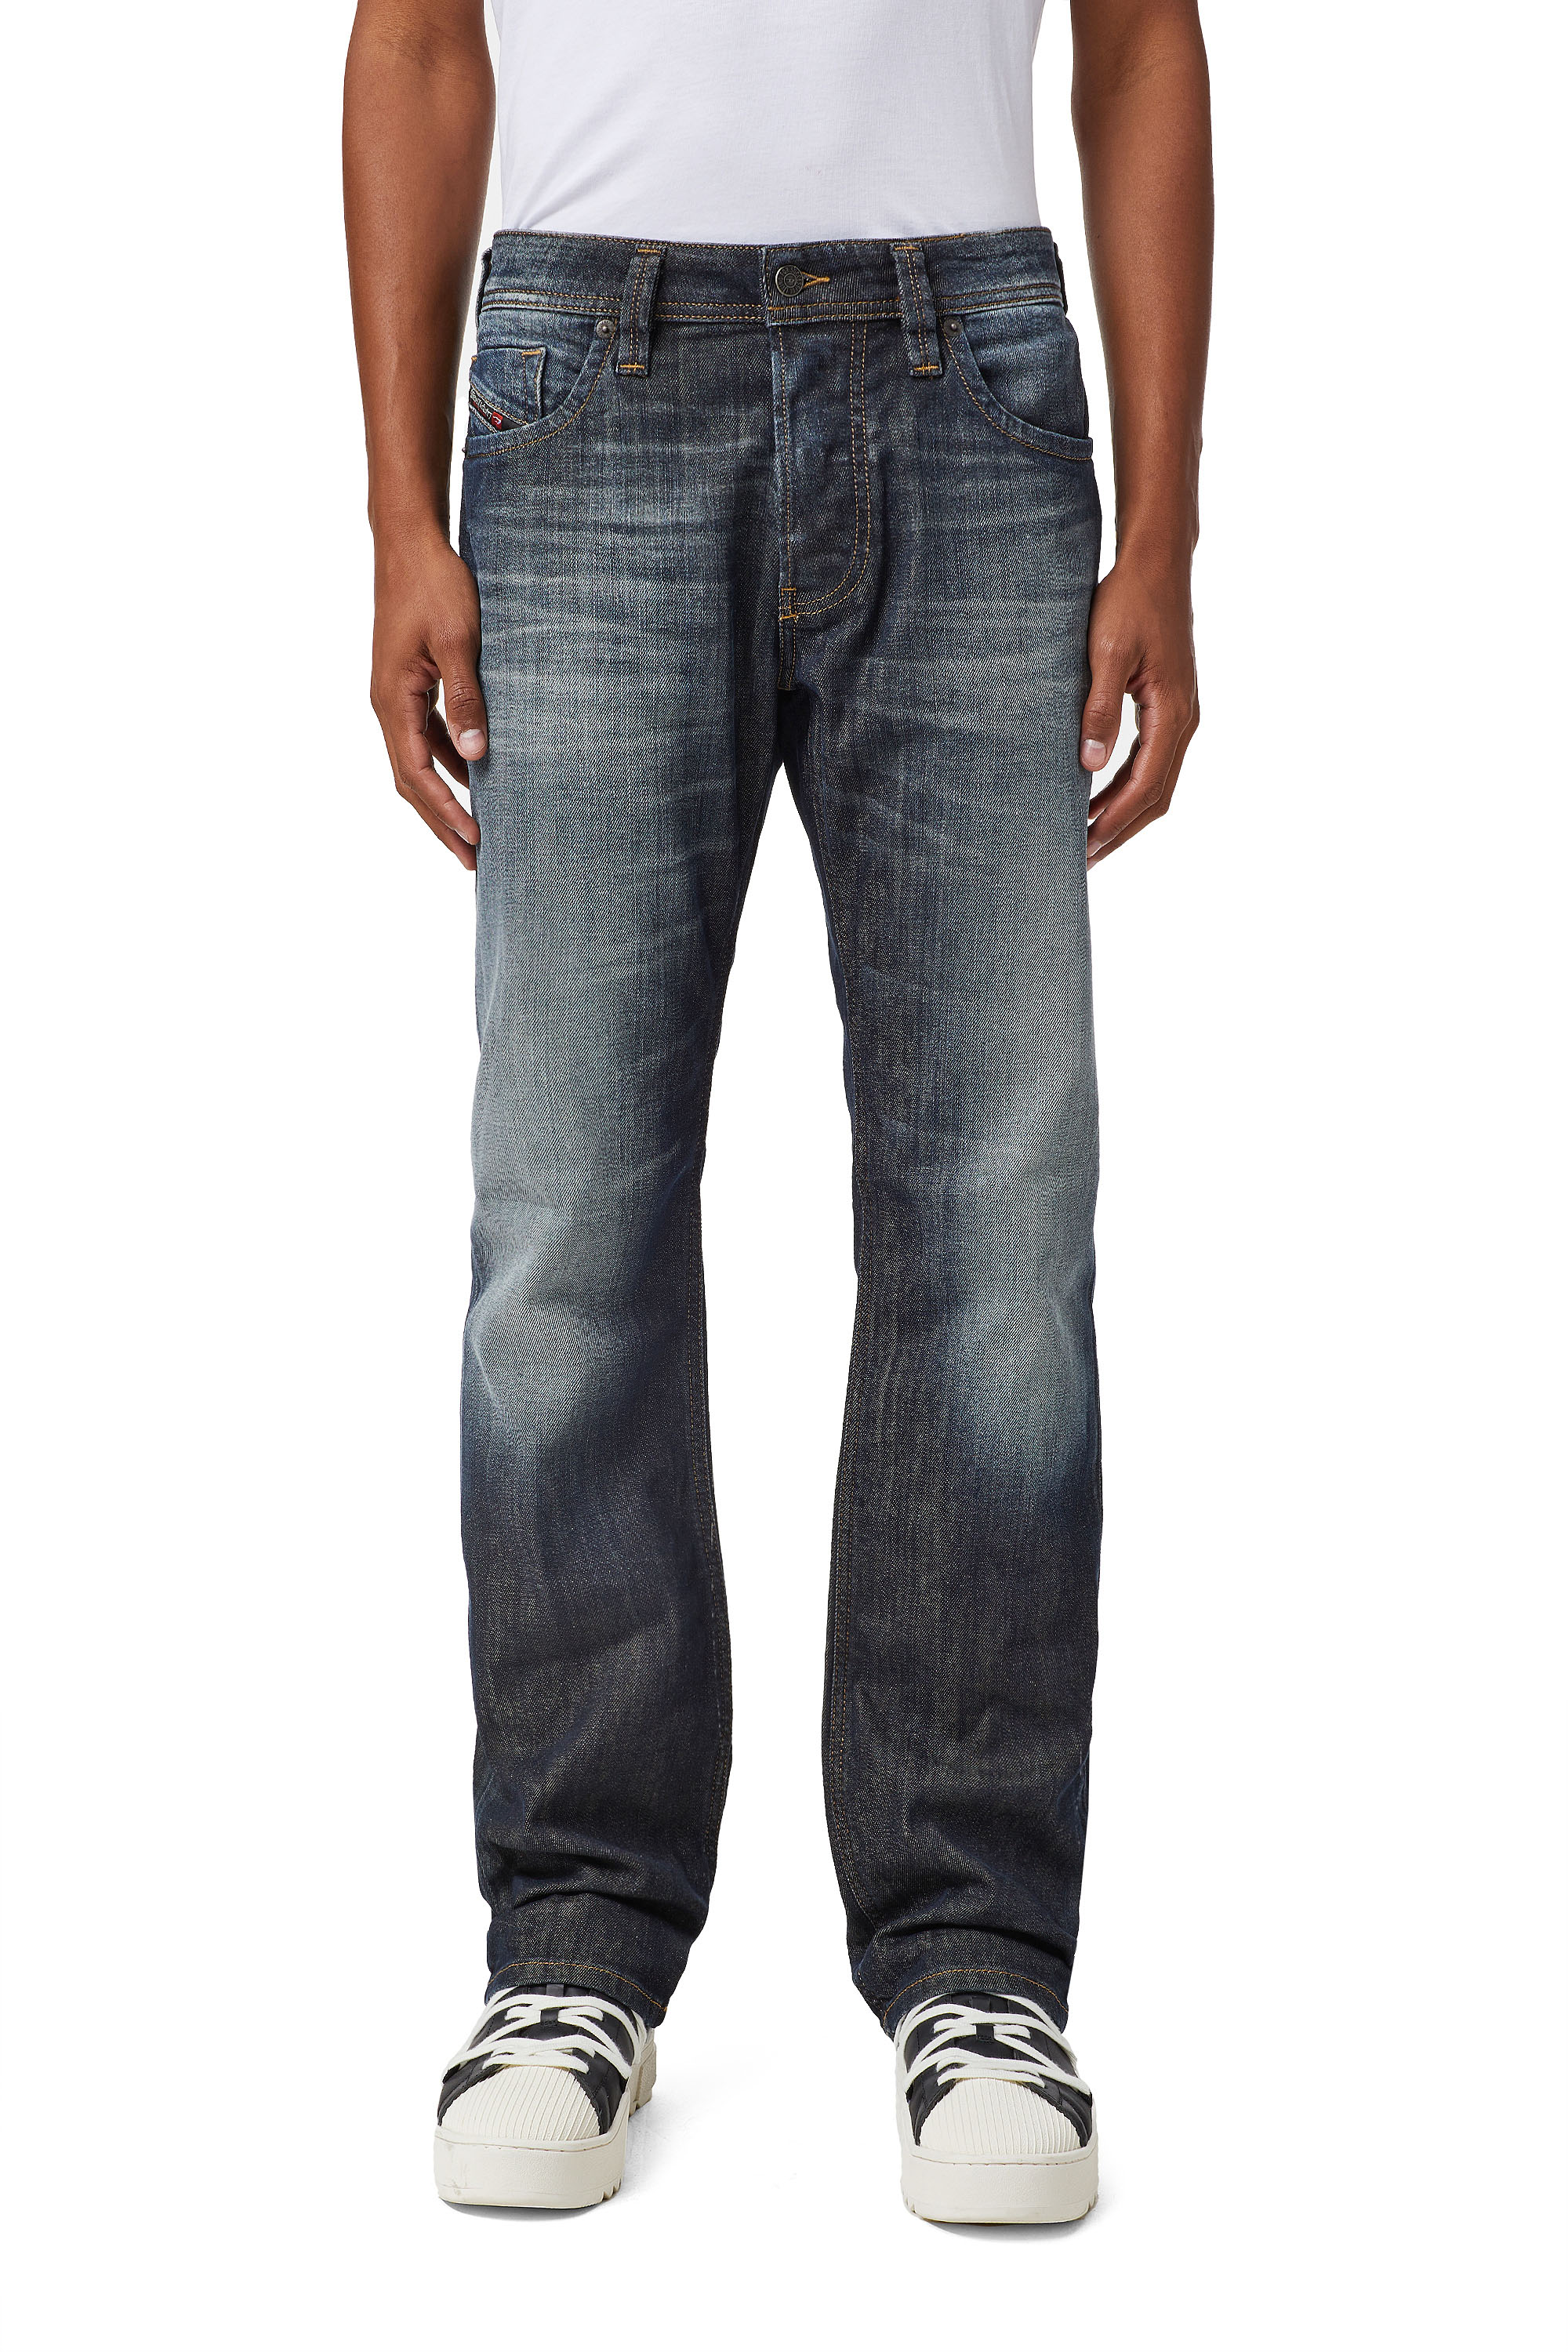 Diesel - Larkee 009EP Straight Jeans,  - Image 1